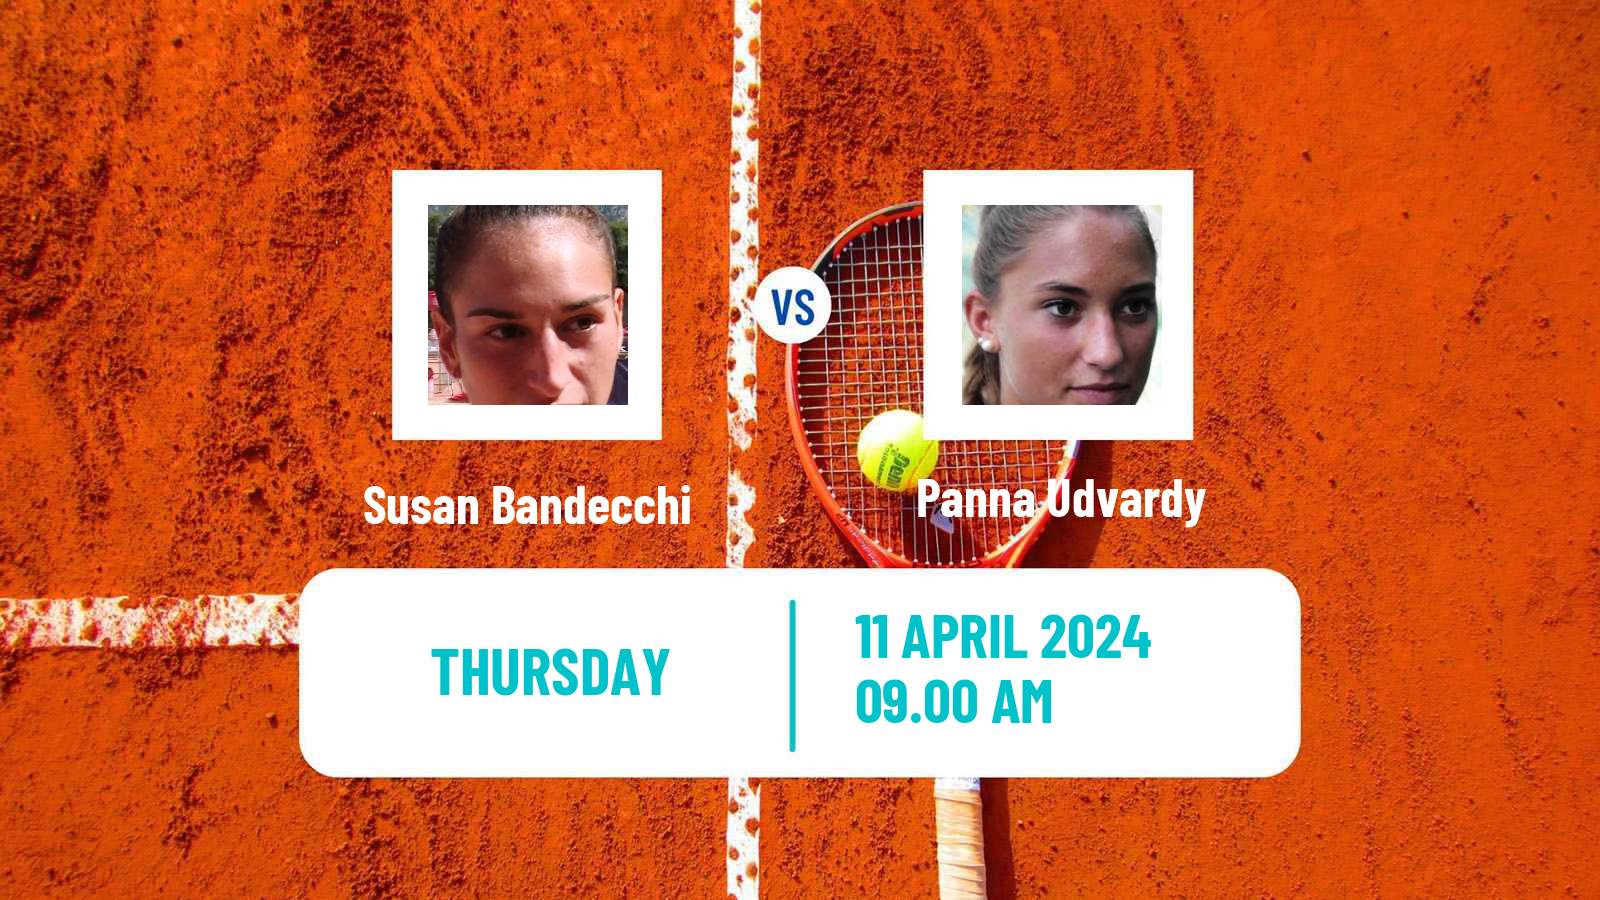 Tennis ITF W75 Bellinzona Women Susan Bandecchi - Panna Udvardy